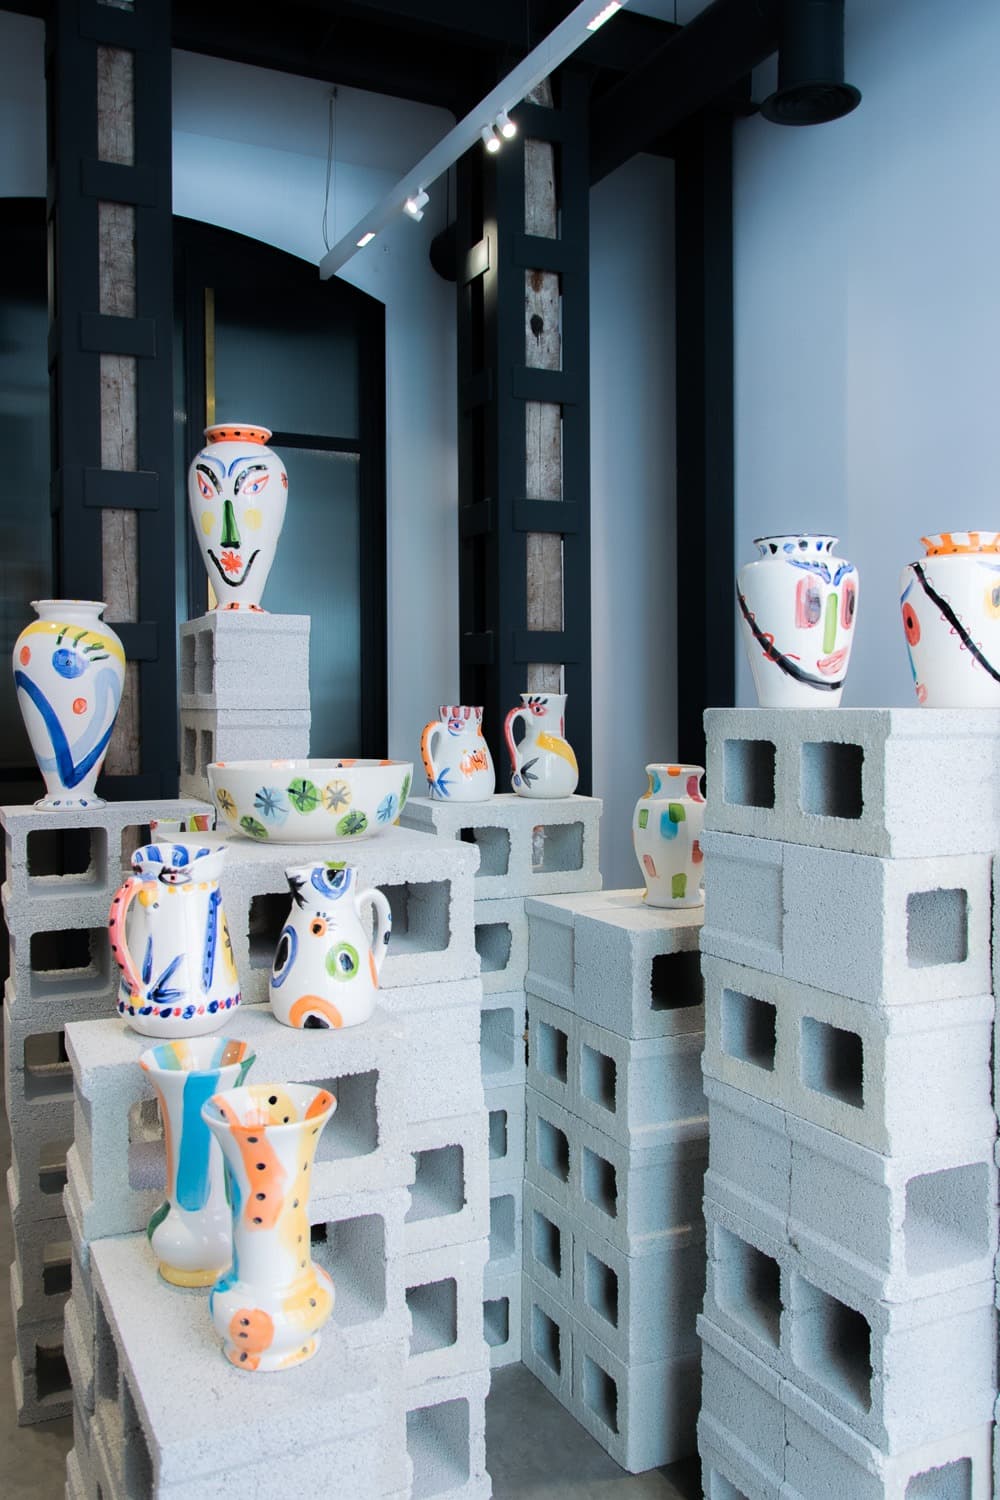 Arena Martinez Projects - Contemporary Art - Ceramics - 2